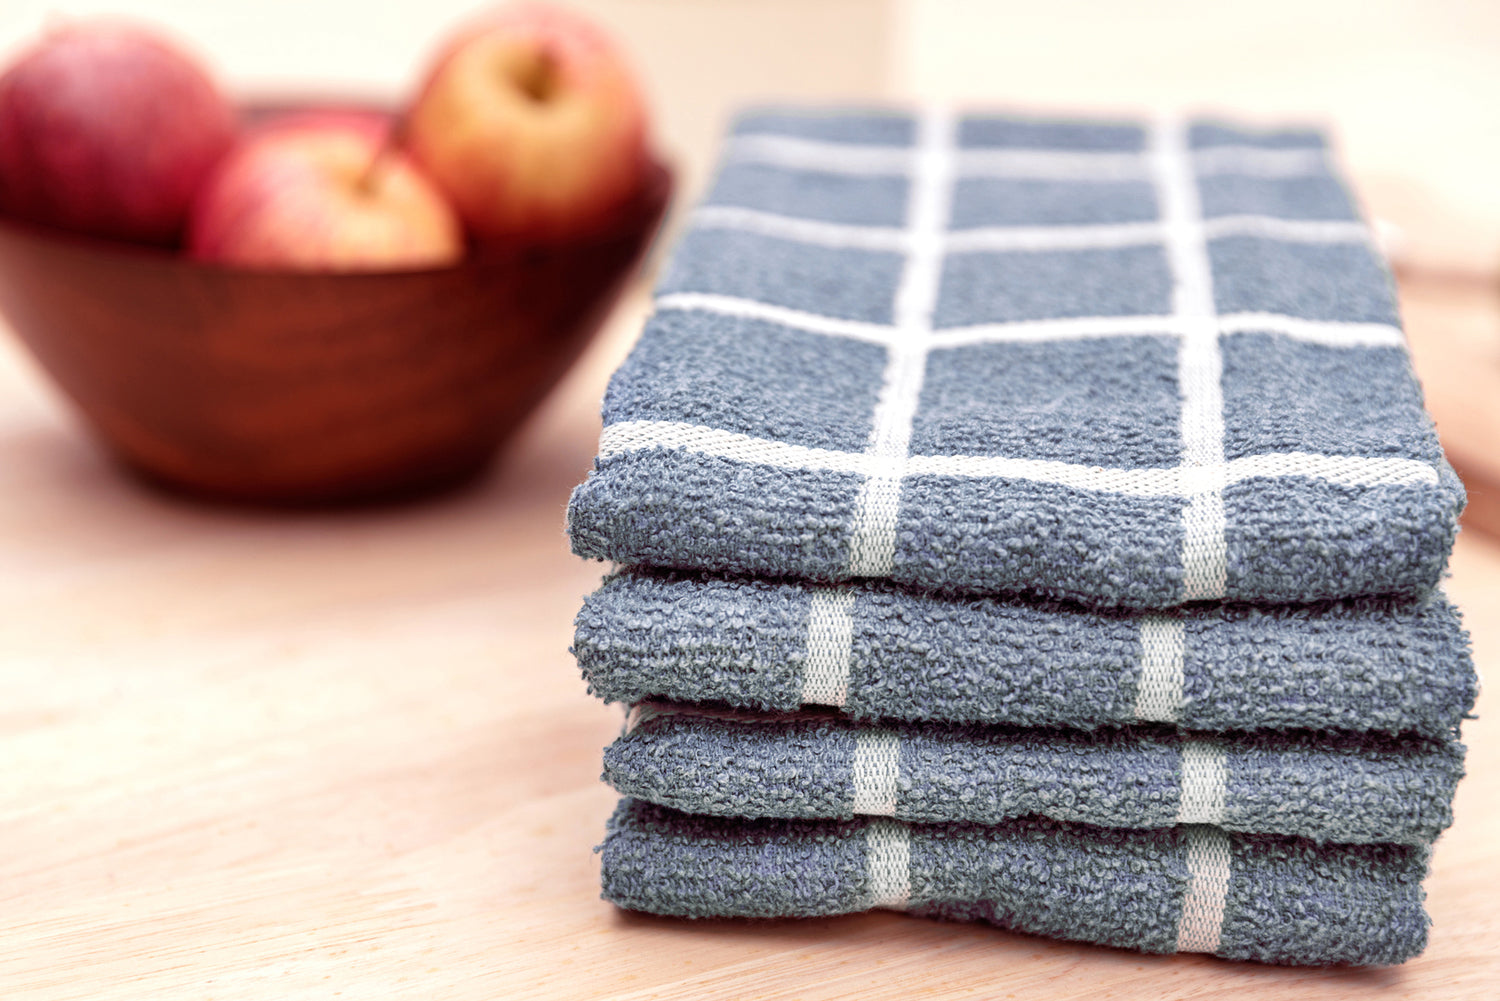 Apple and Gingham Tea Towel Set, Cotton Dish Towels